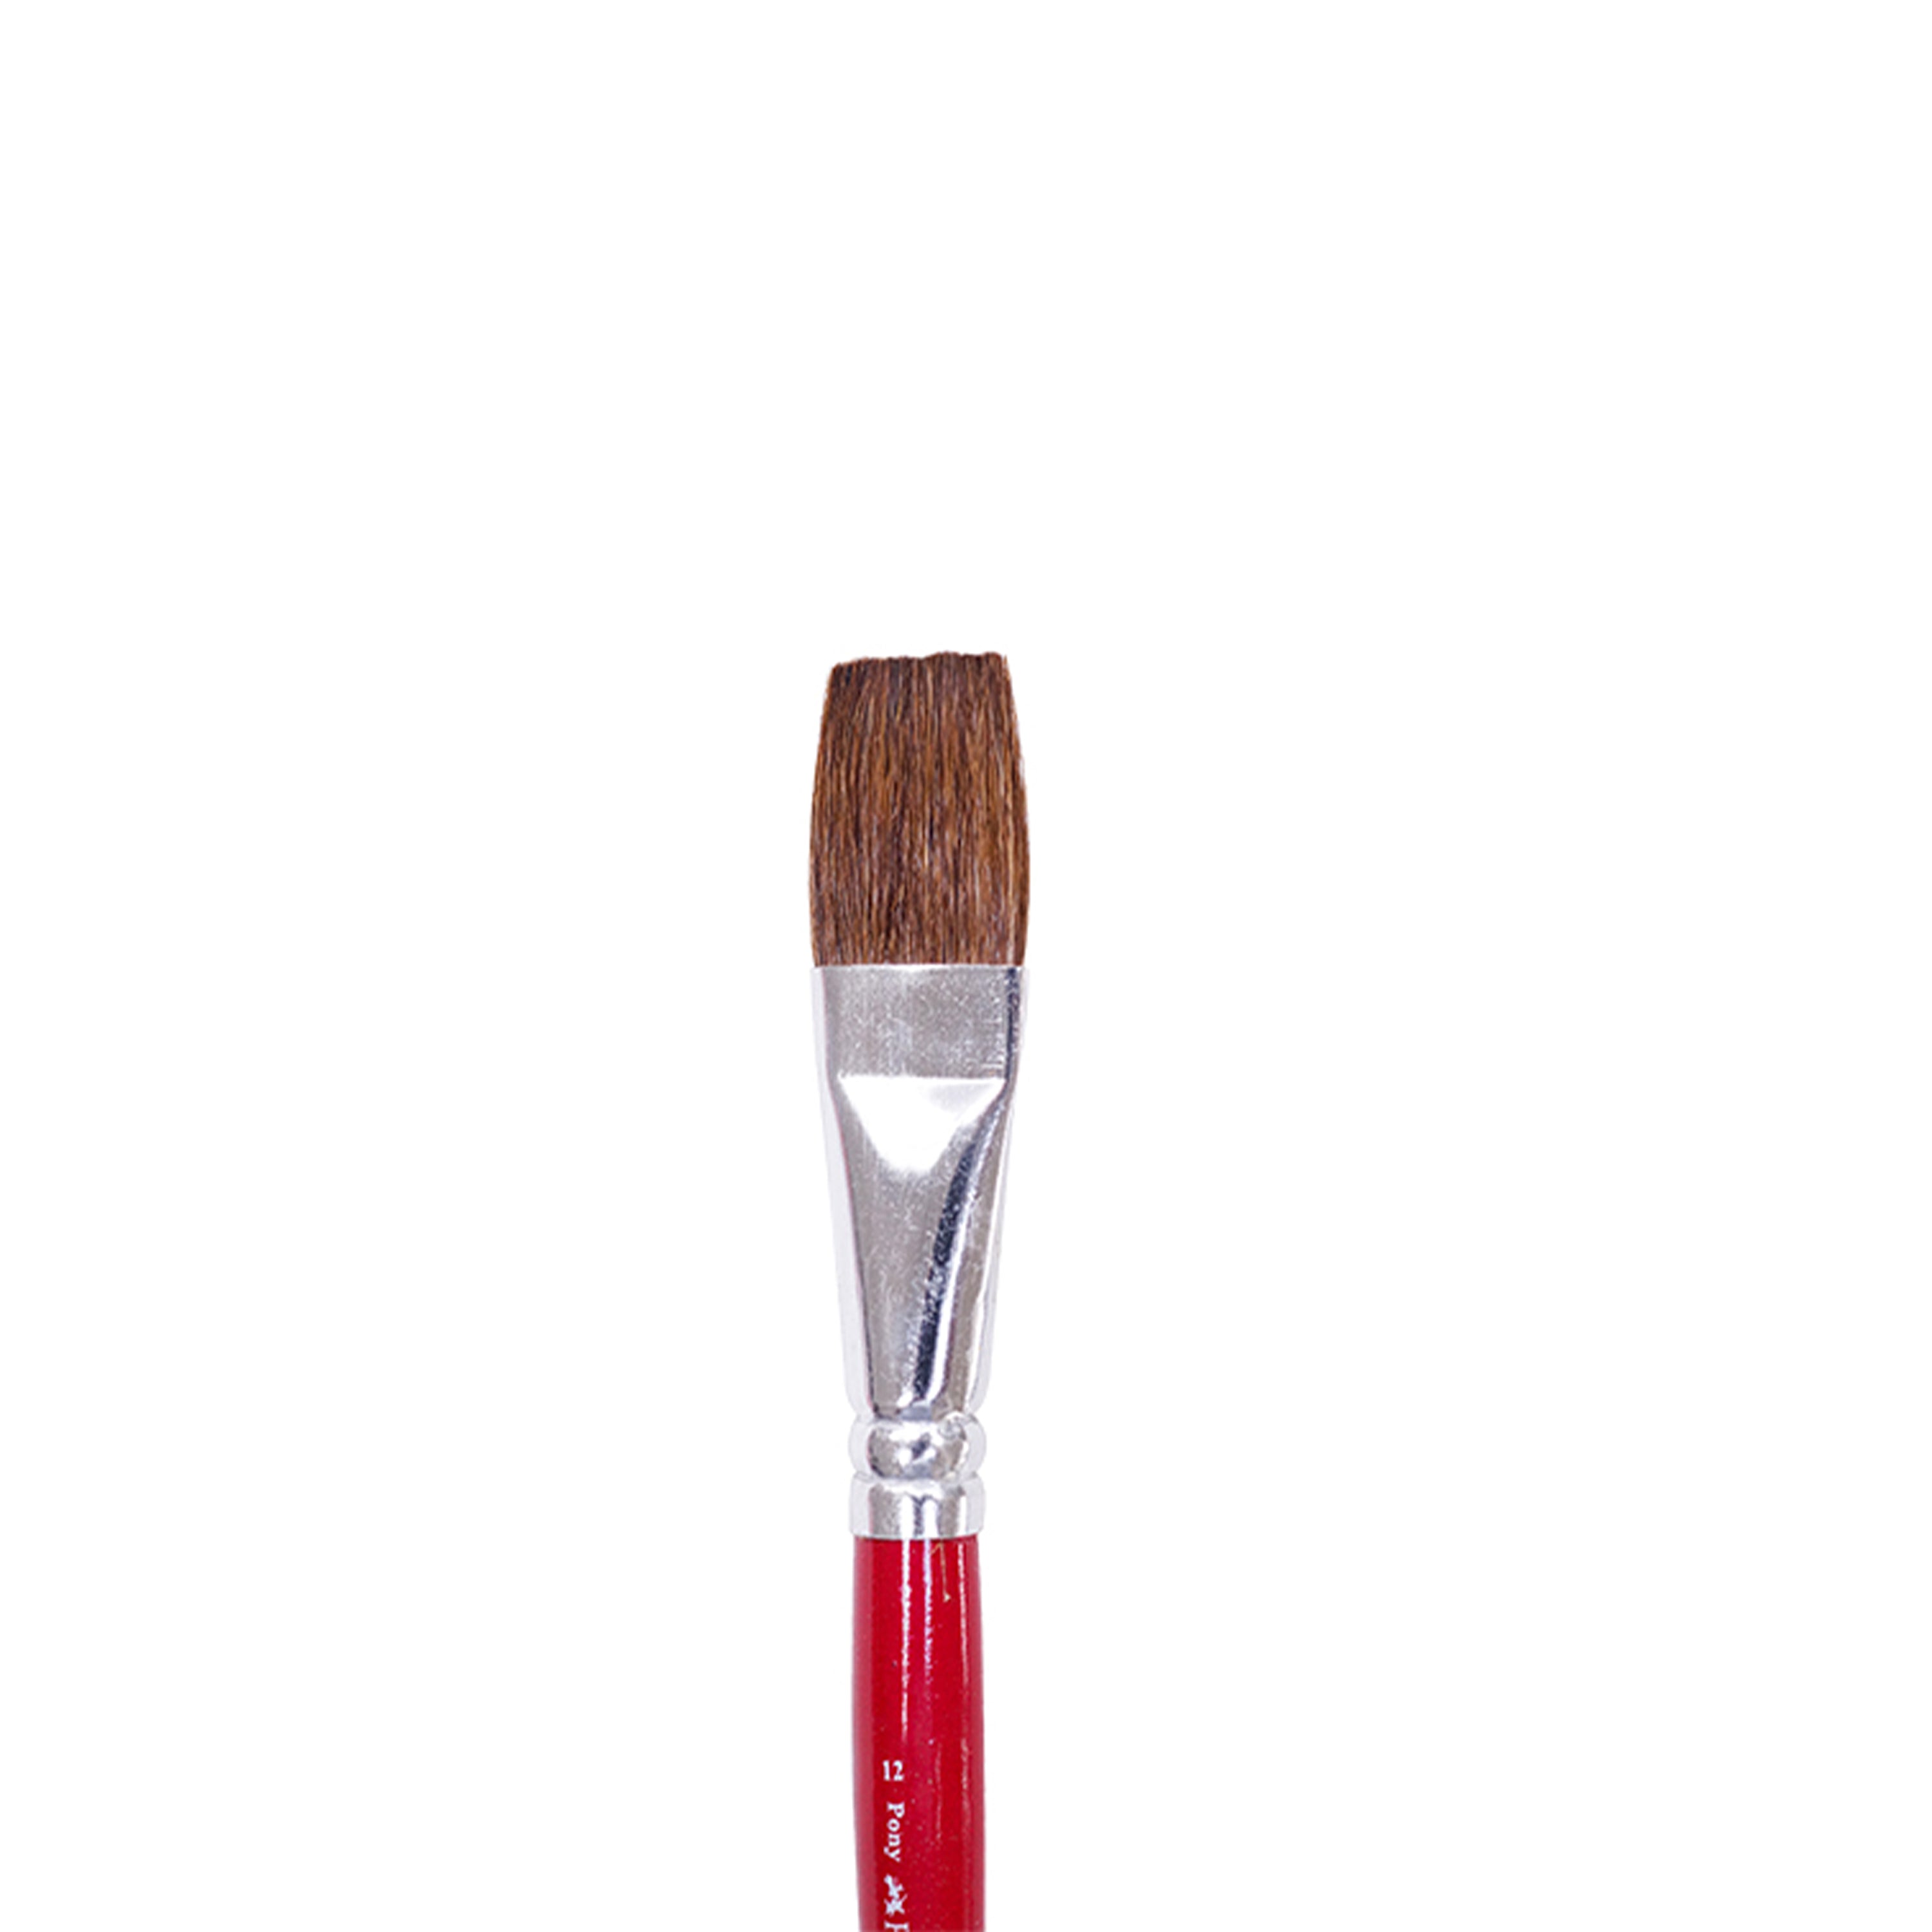 Faber Castell Paint Brush - Pony Hair Flat Size 12, 1pc